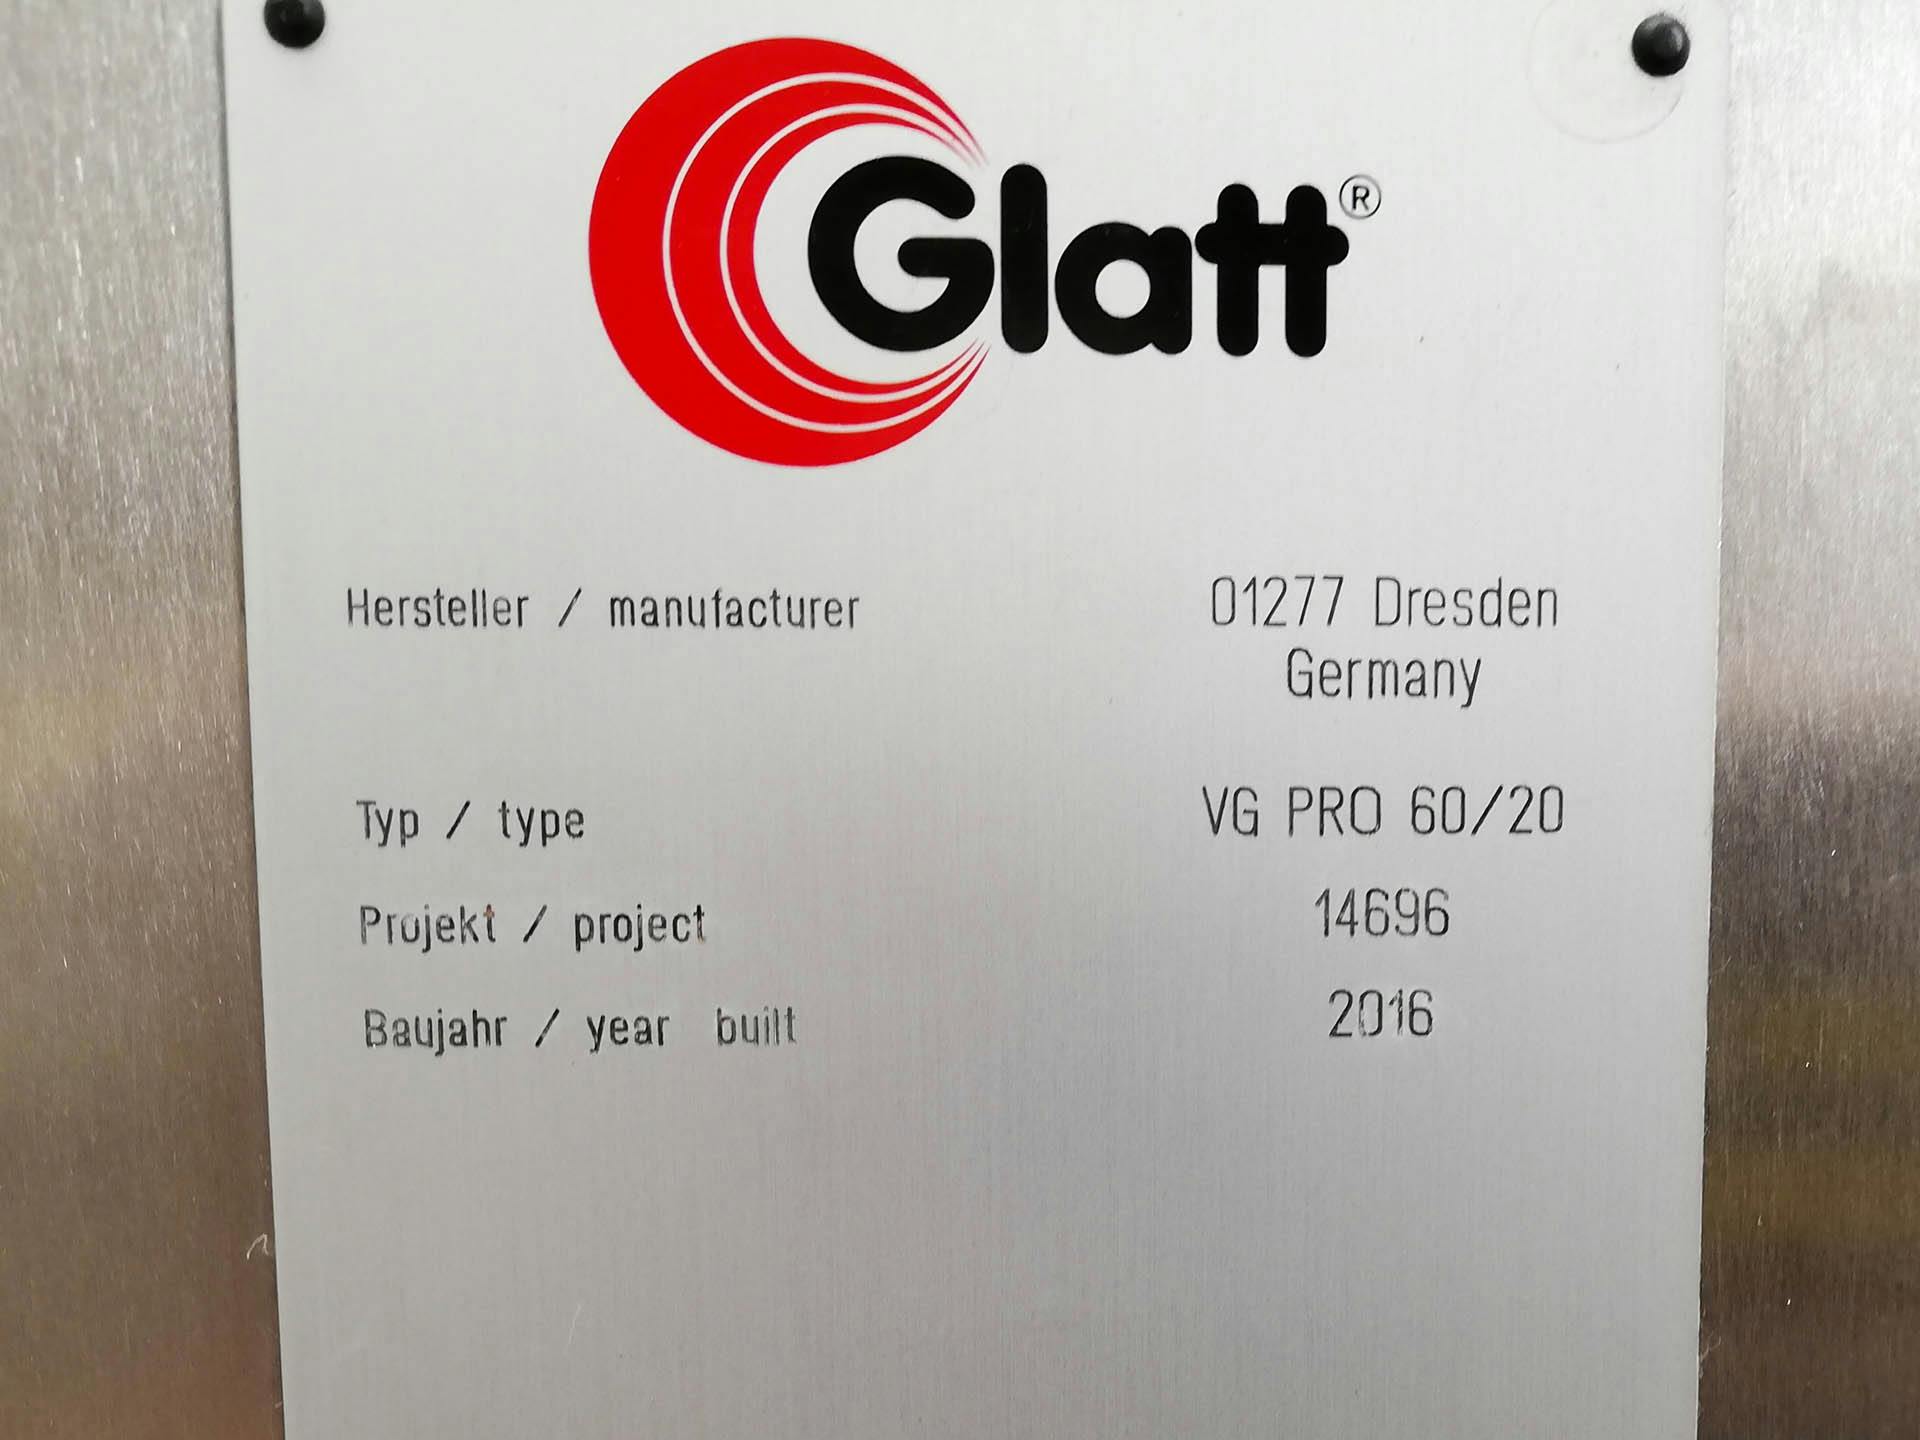 Glatt VGPRO 60/20 - Universal mixer - image 5